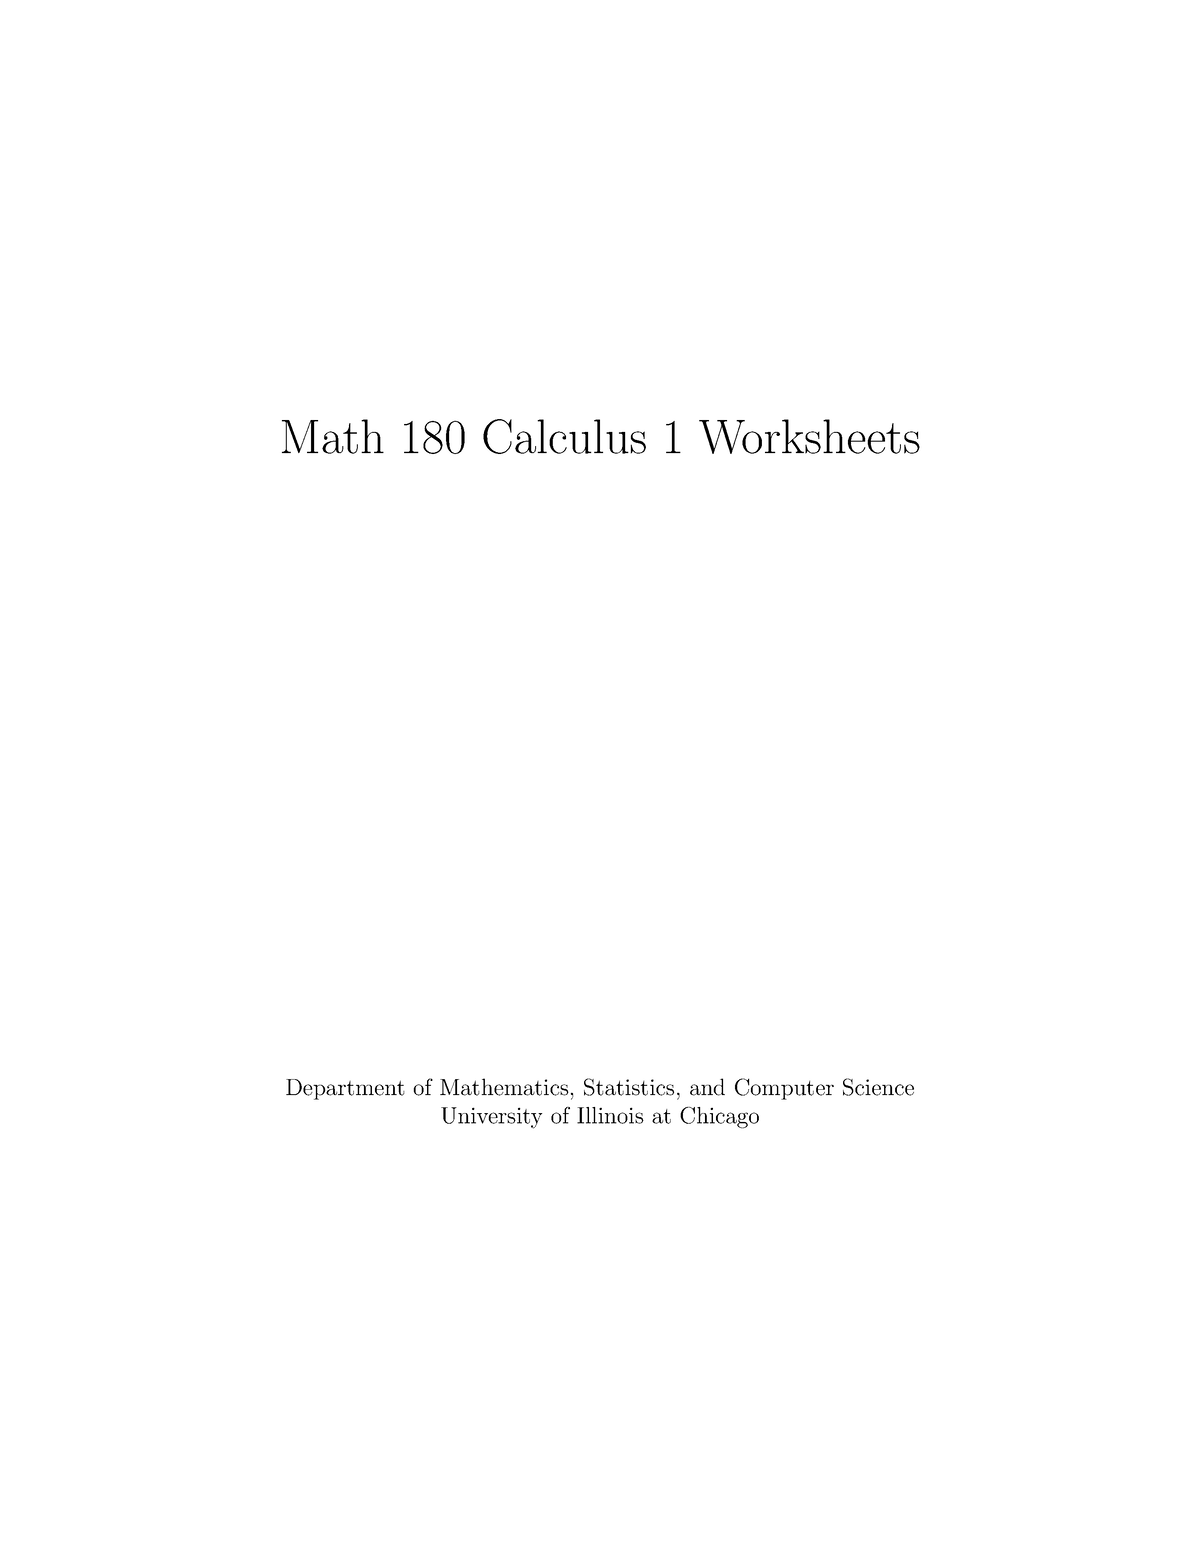 math-180-worksheets-math-180-calculus-1-worksheets-department-of-mathematics-statistics-and